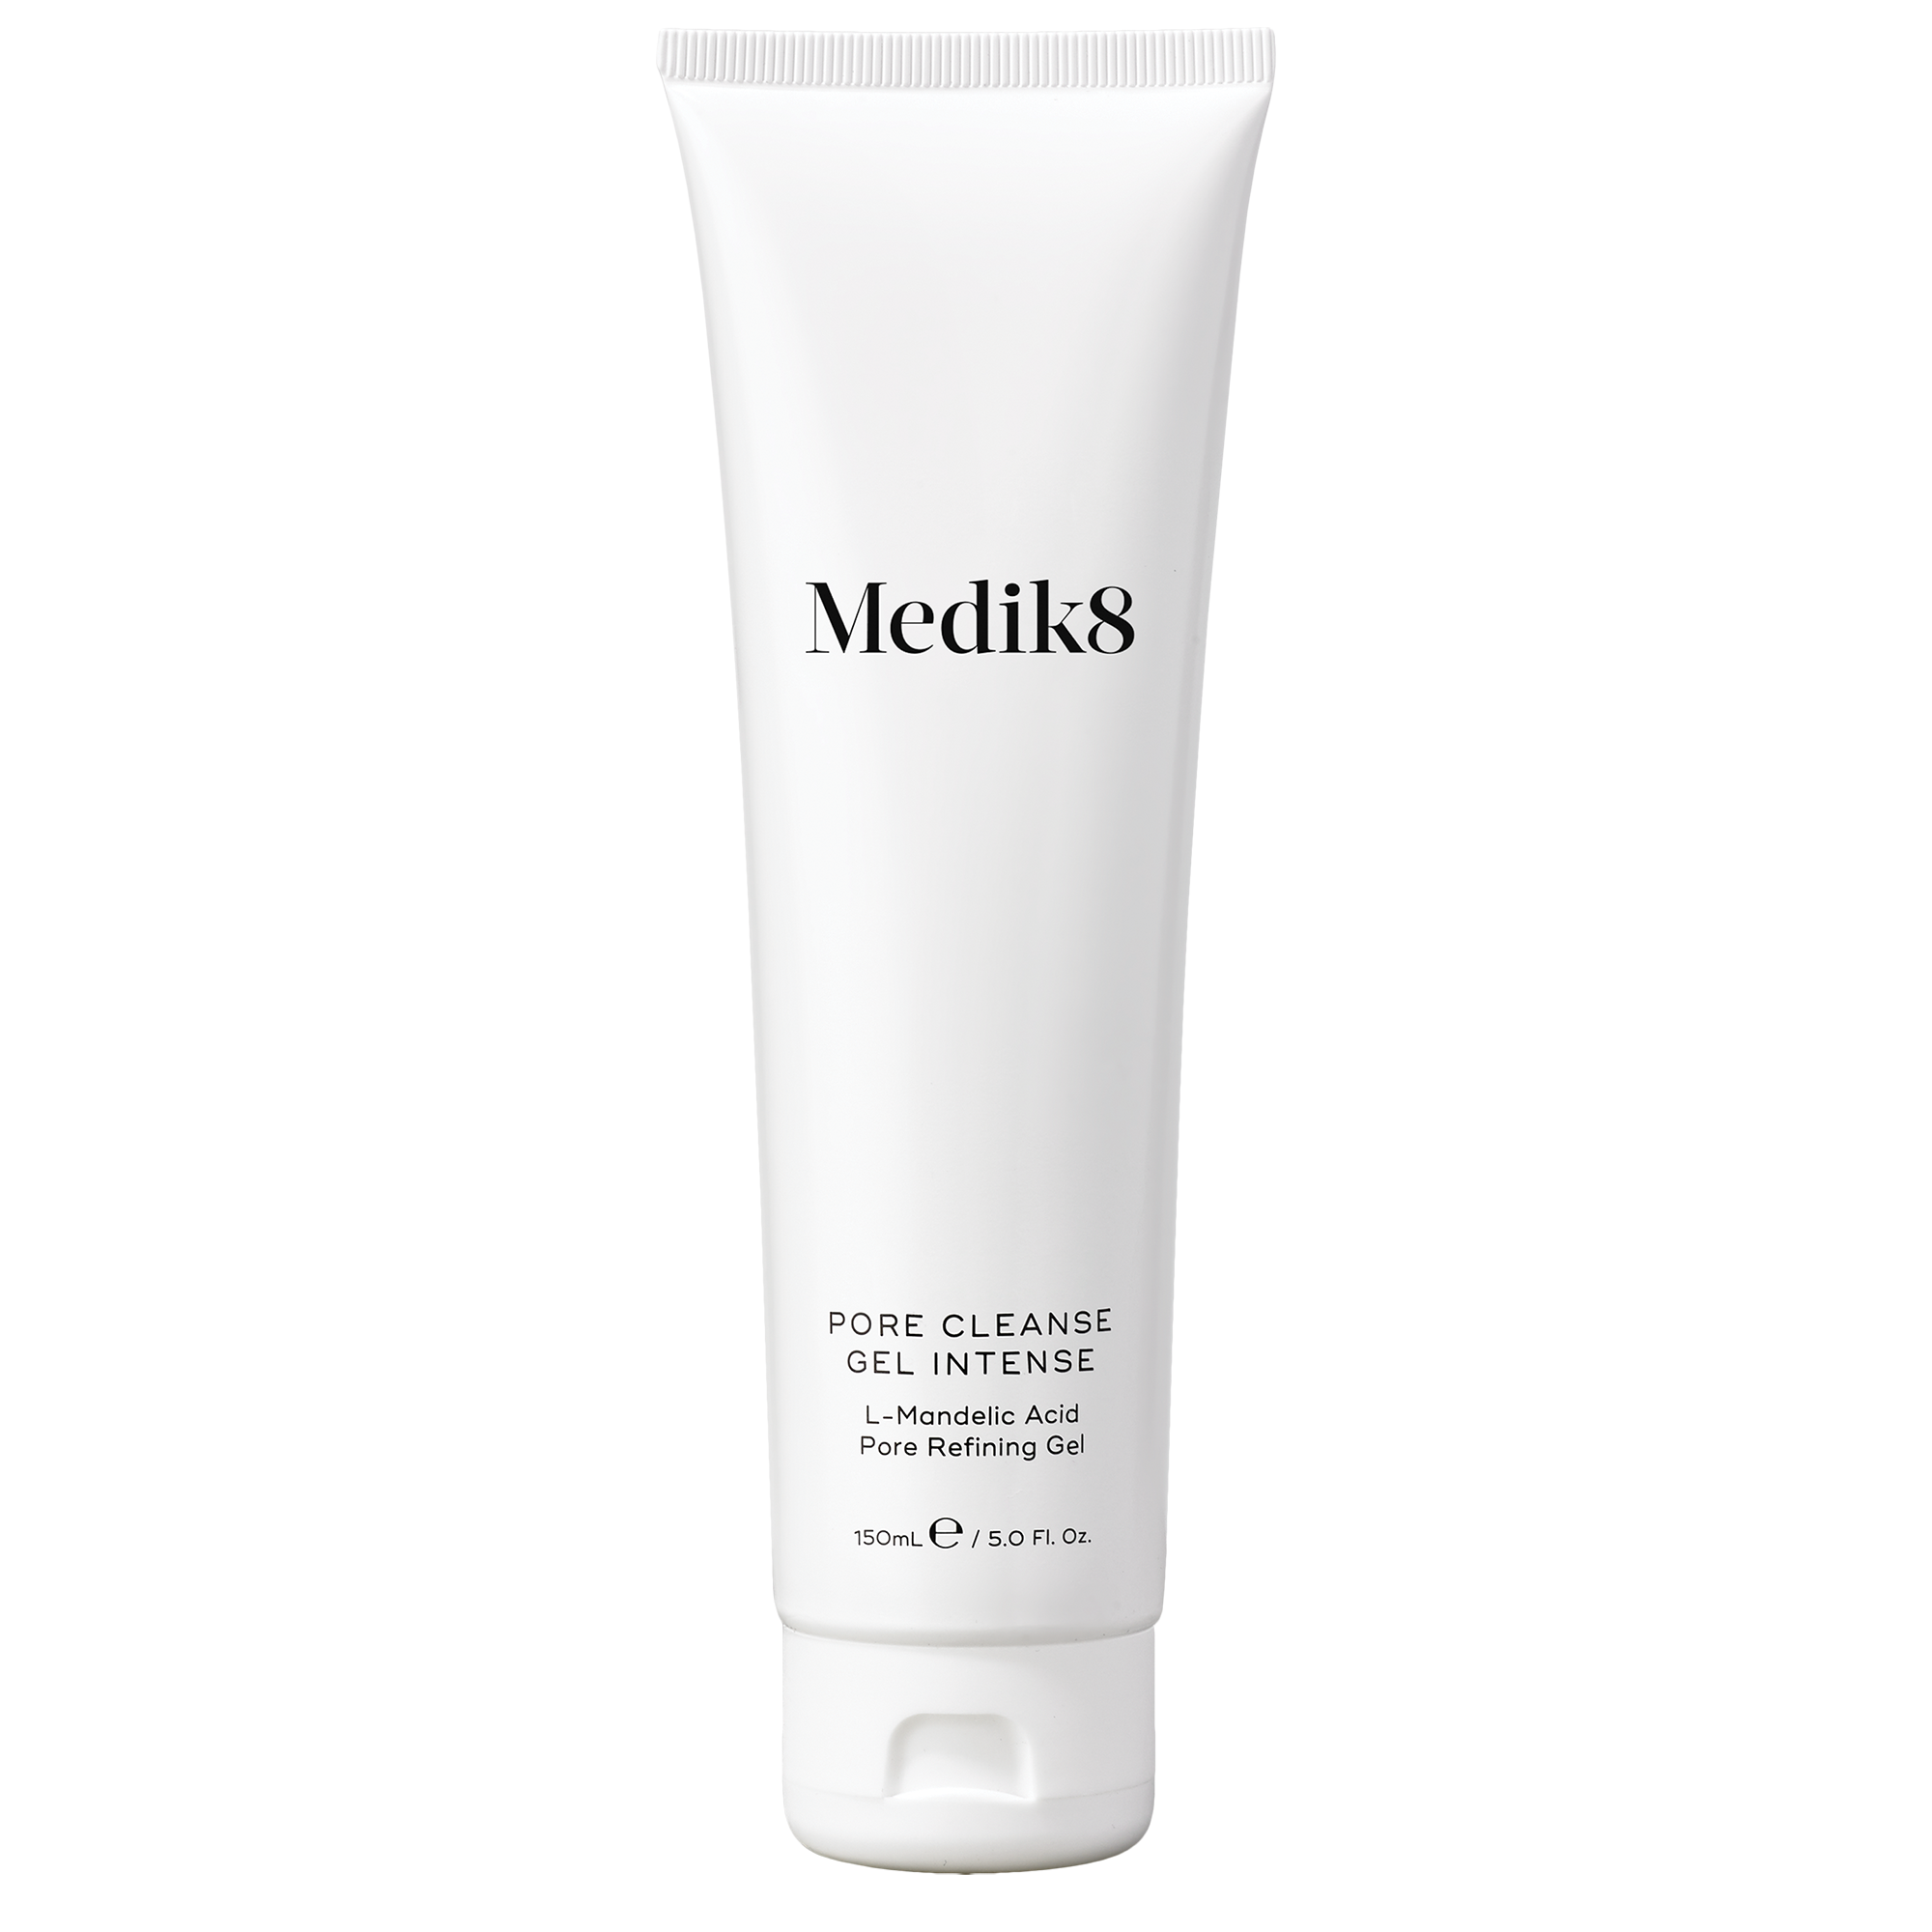 Medik8 Pore Cleanse Gel Intense 150mL